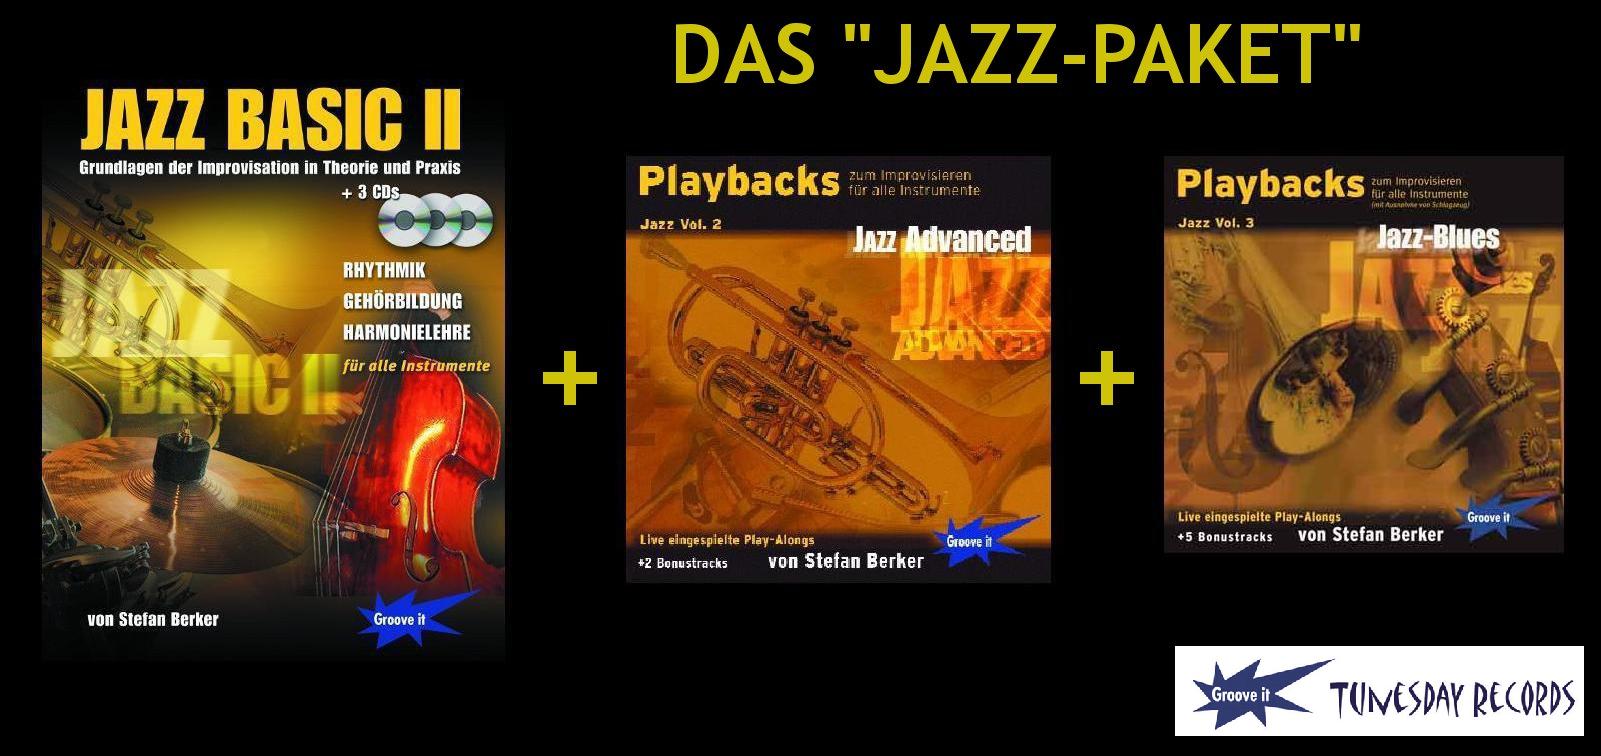 Jazz-Paket zum Vorzugspreis!!! FÃ¼r den fortgeschrittenen Musiker